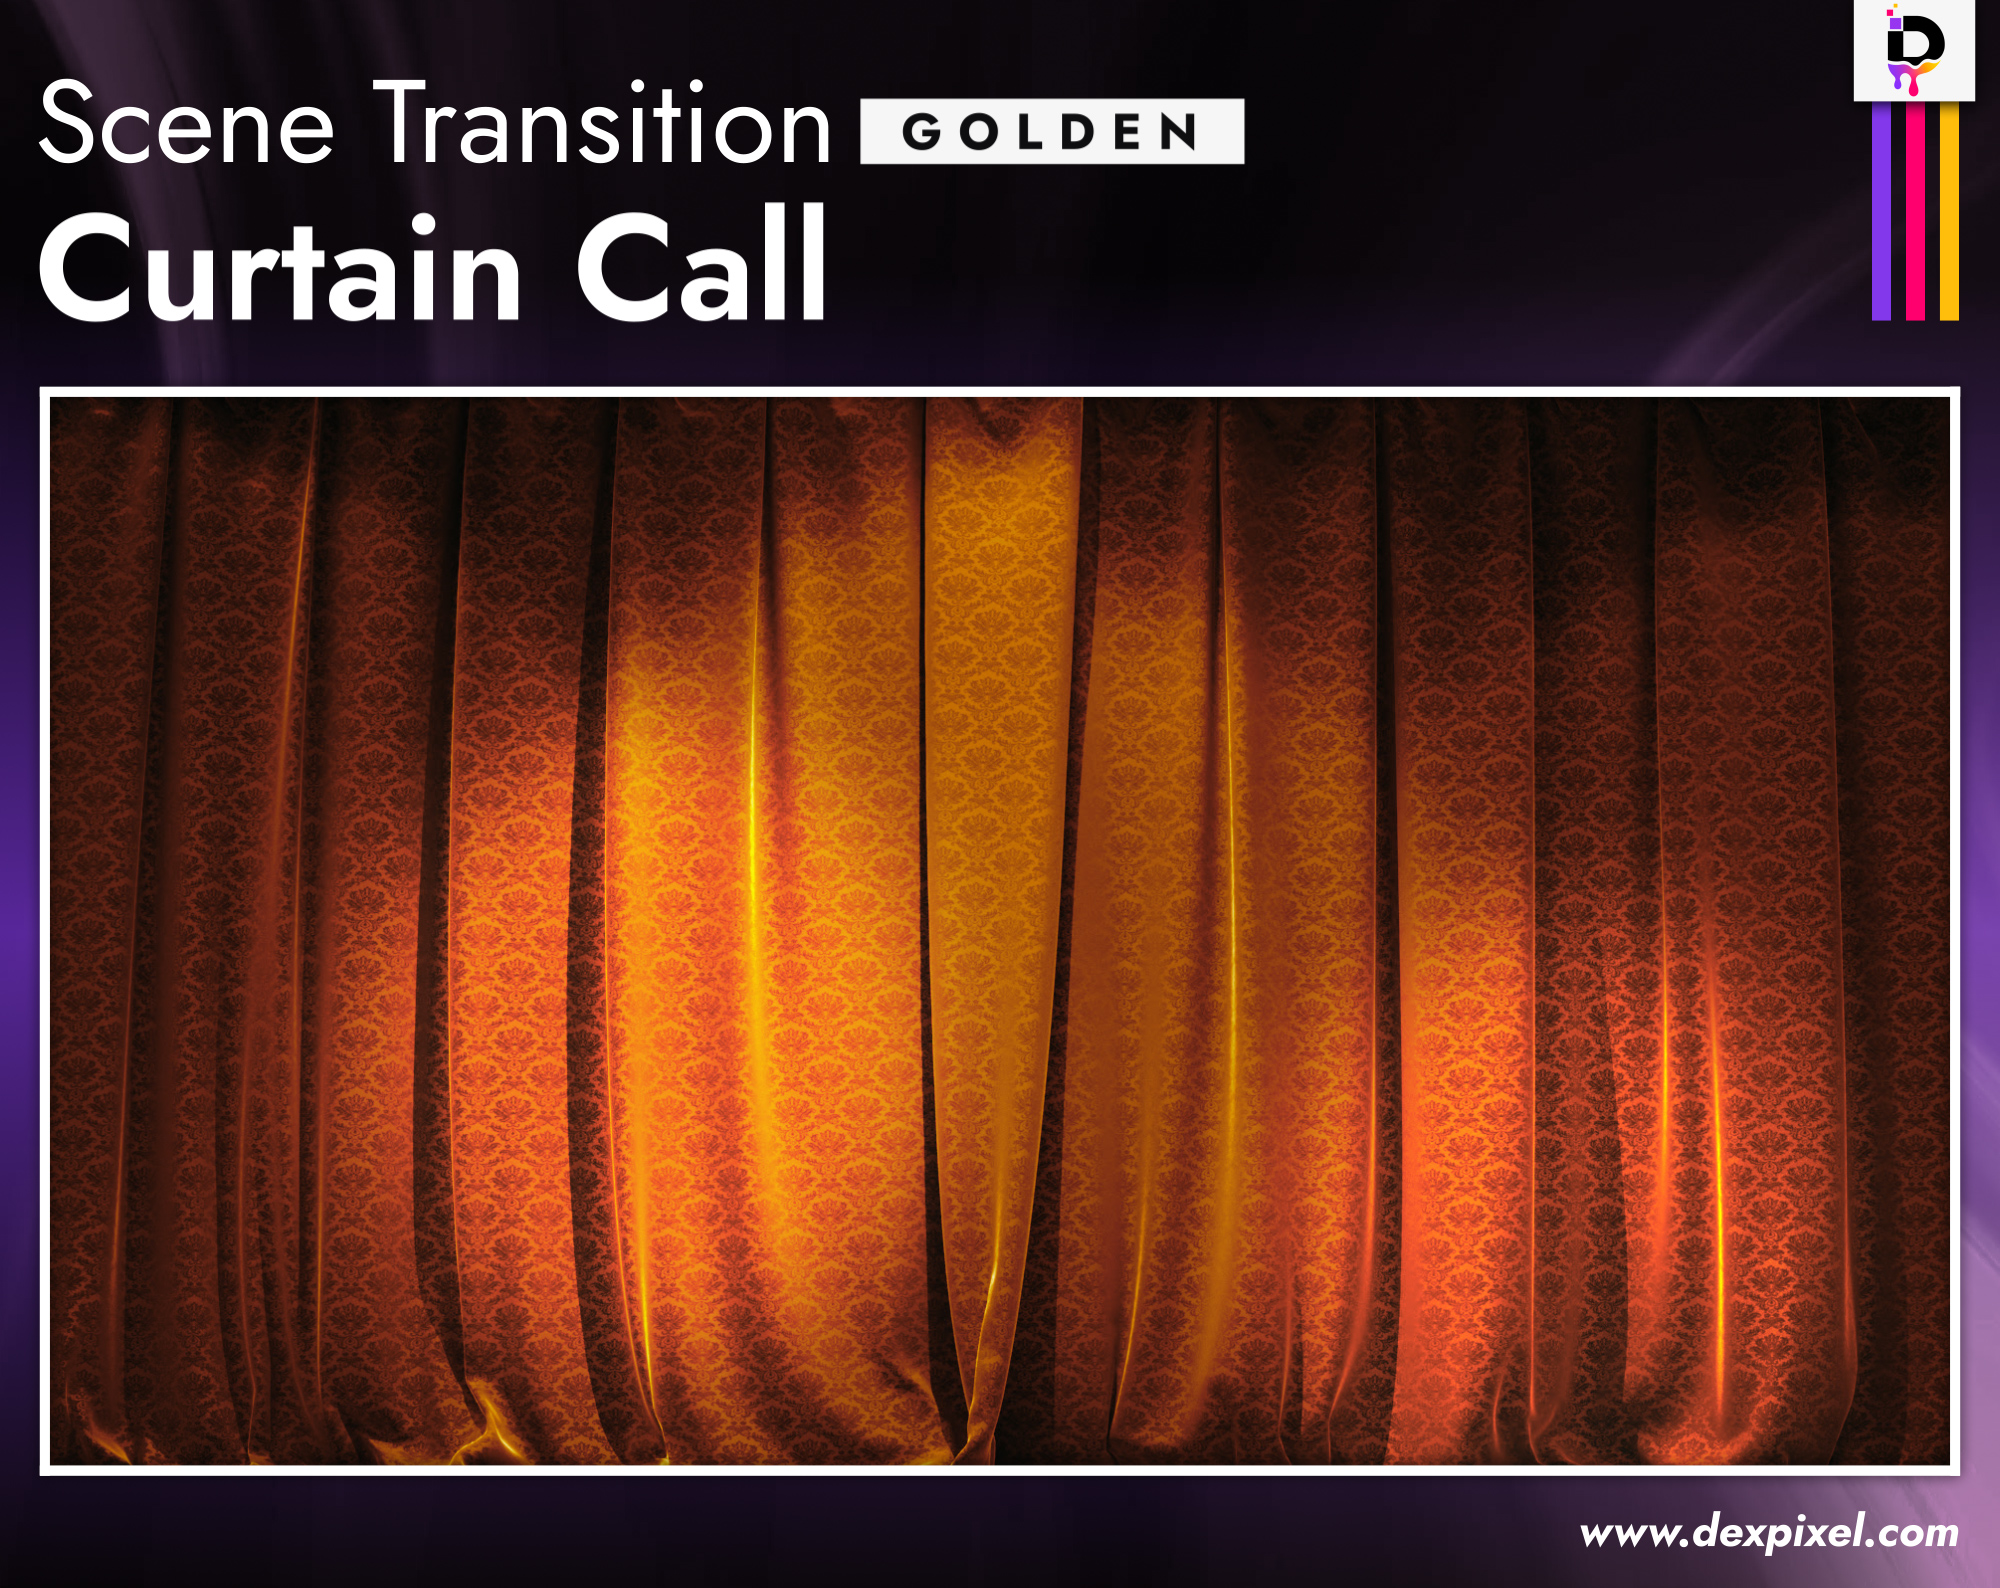 Scene Transition Dexpixel Curtain Call Golden